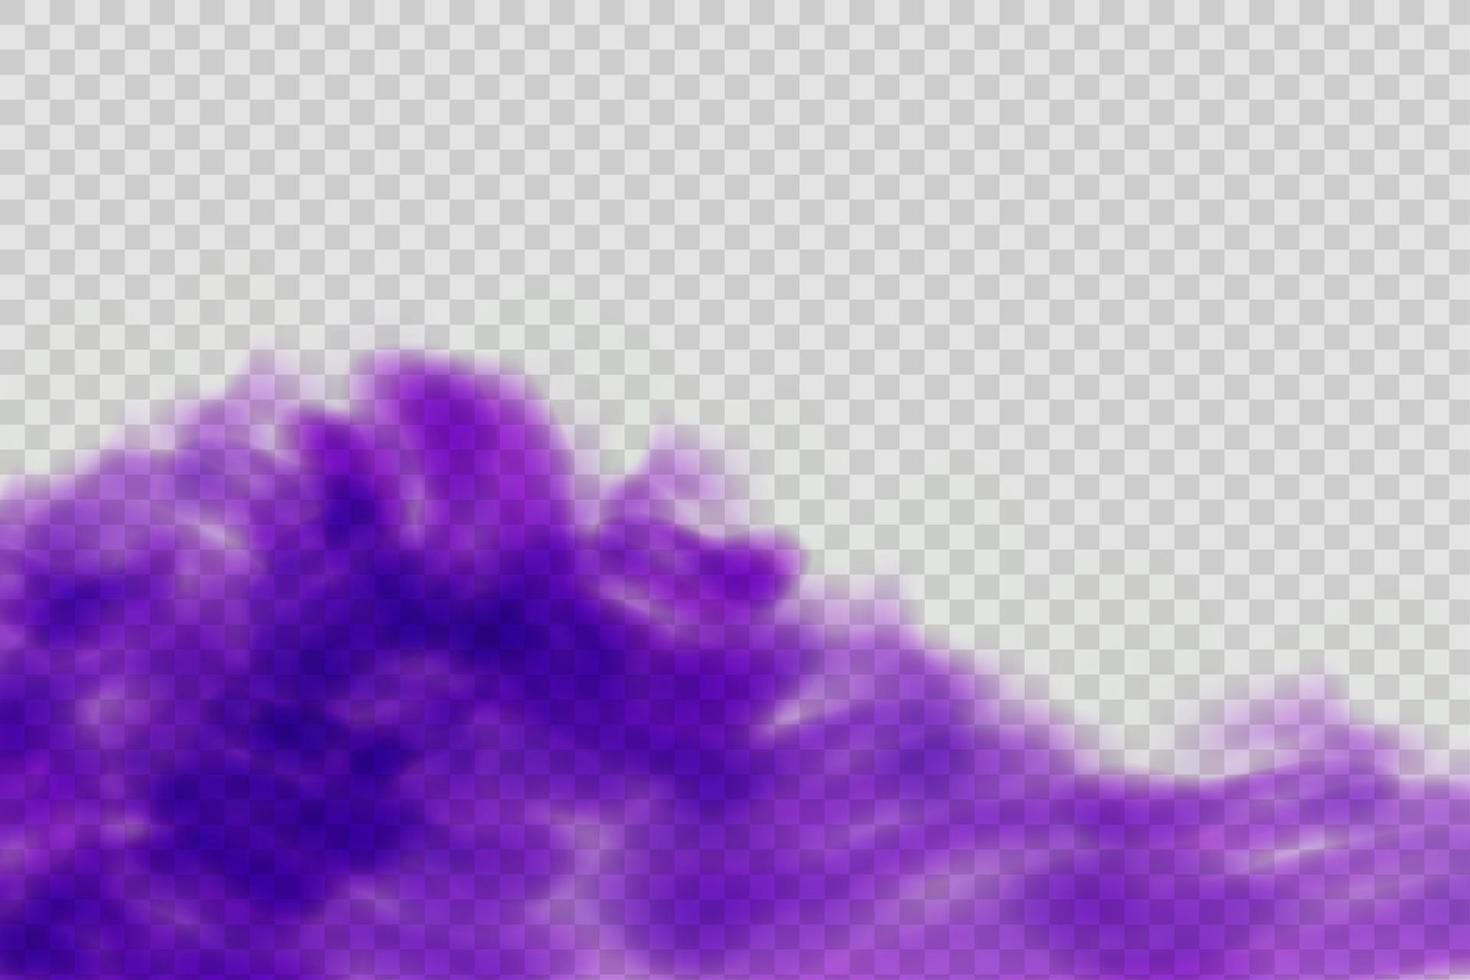 névoa violeta mística assustadora realista na noite de halloween. efeito de gás venenoso roxo, poeira e fumaça. vetor